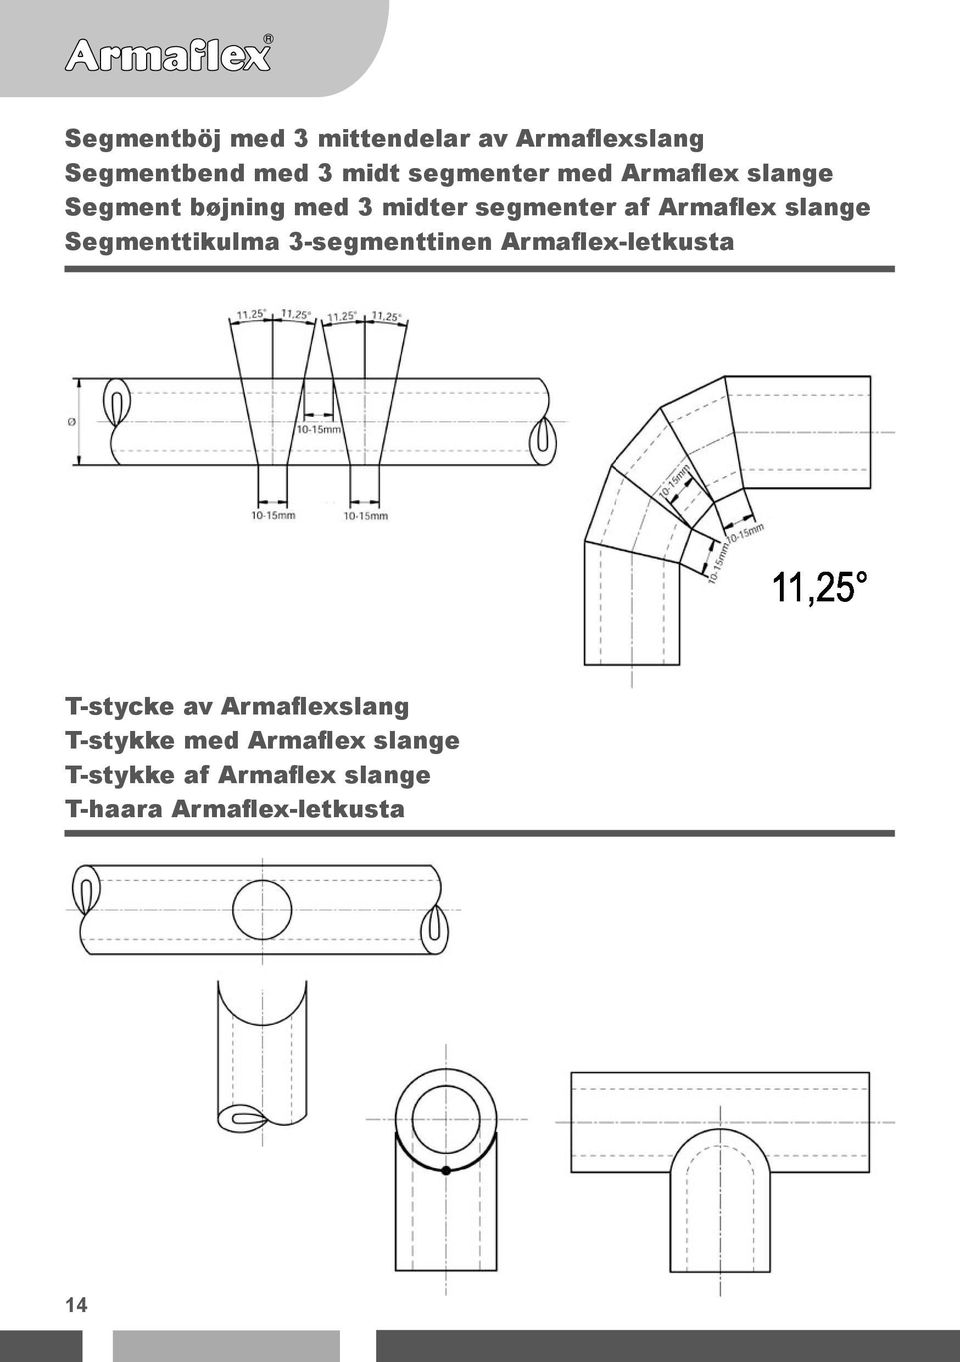 Segmenttikulma 3-segmenttinen Armaflex-letkusta T-stycke av Armaflexslang